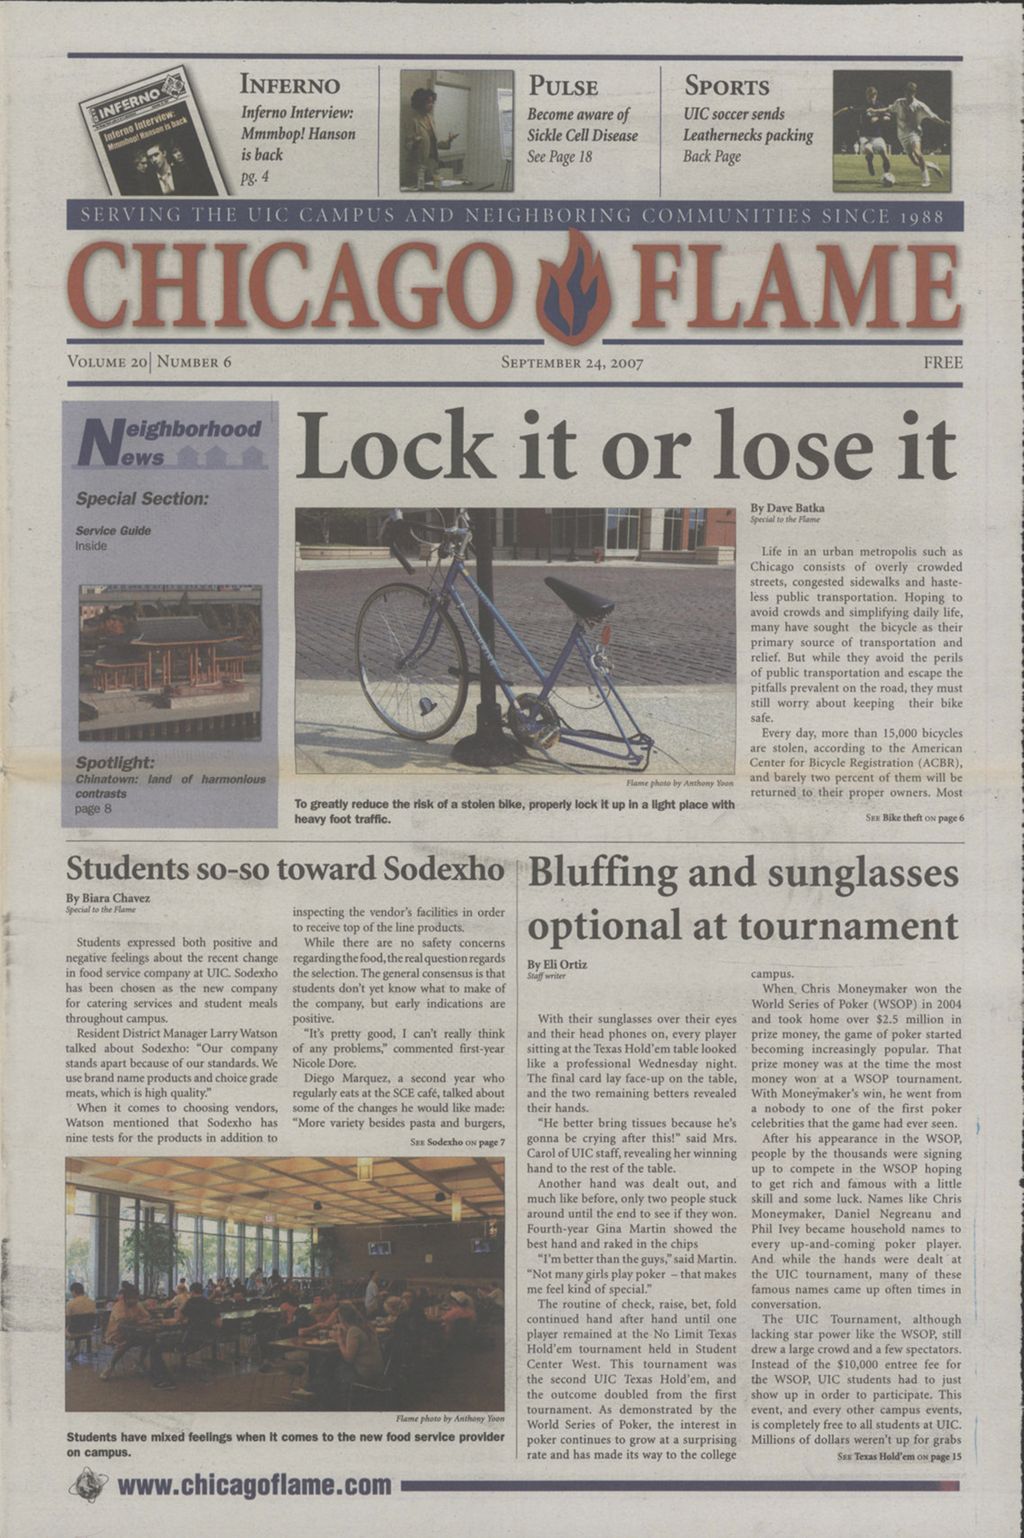 Chicago Flame (September 24, 2007)